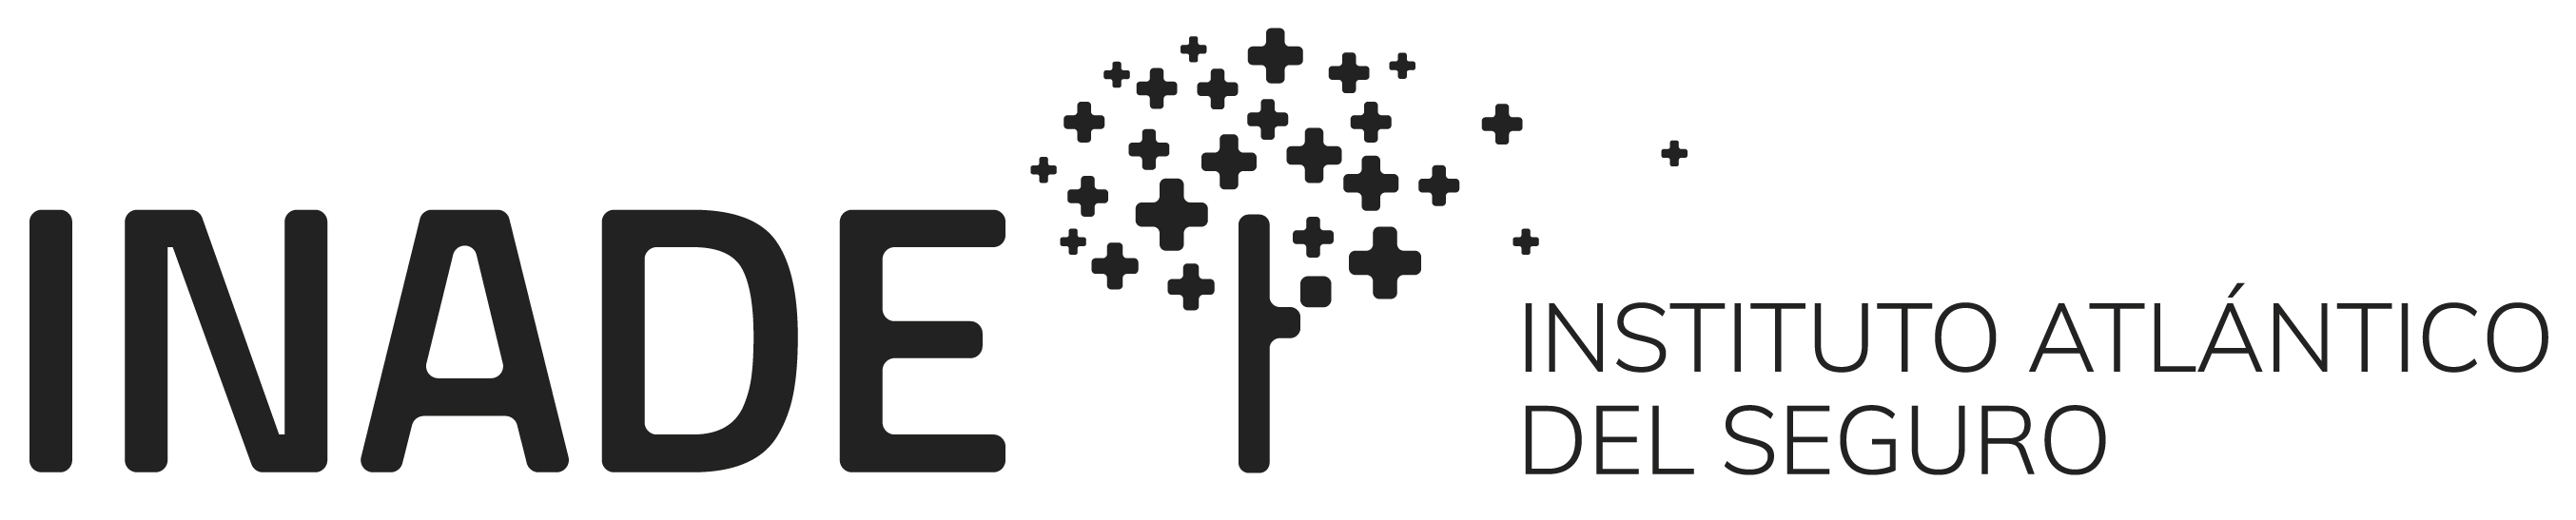 Logo INADE